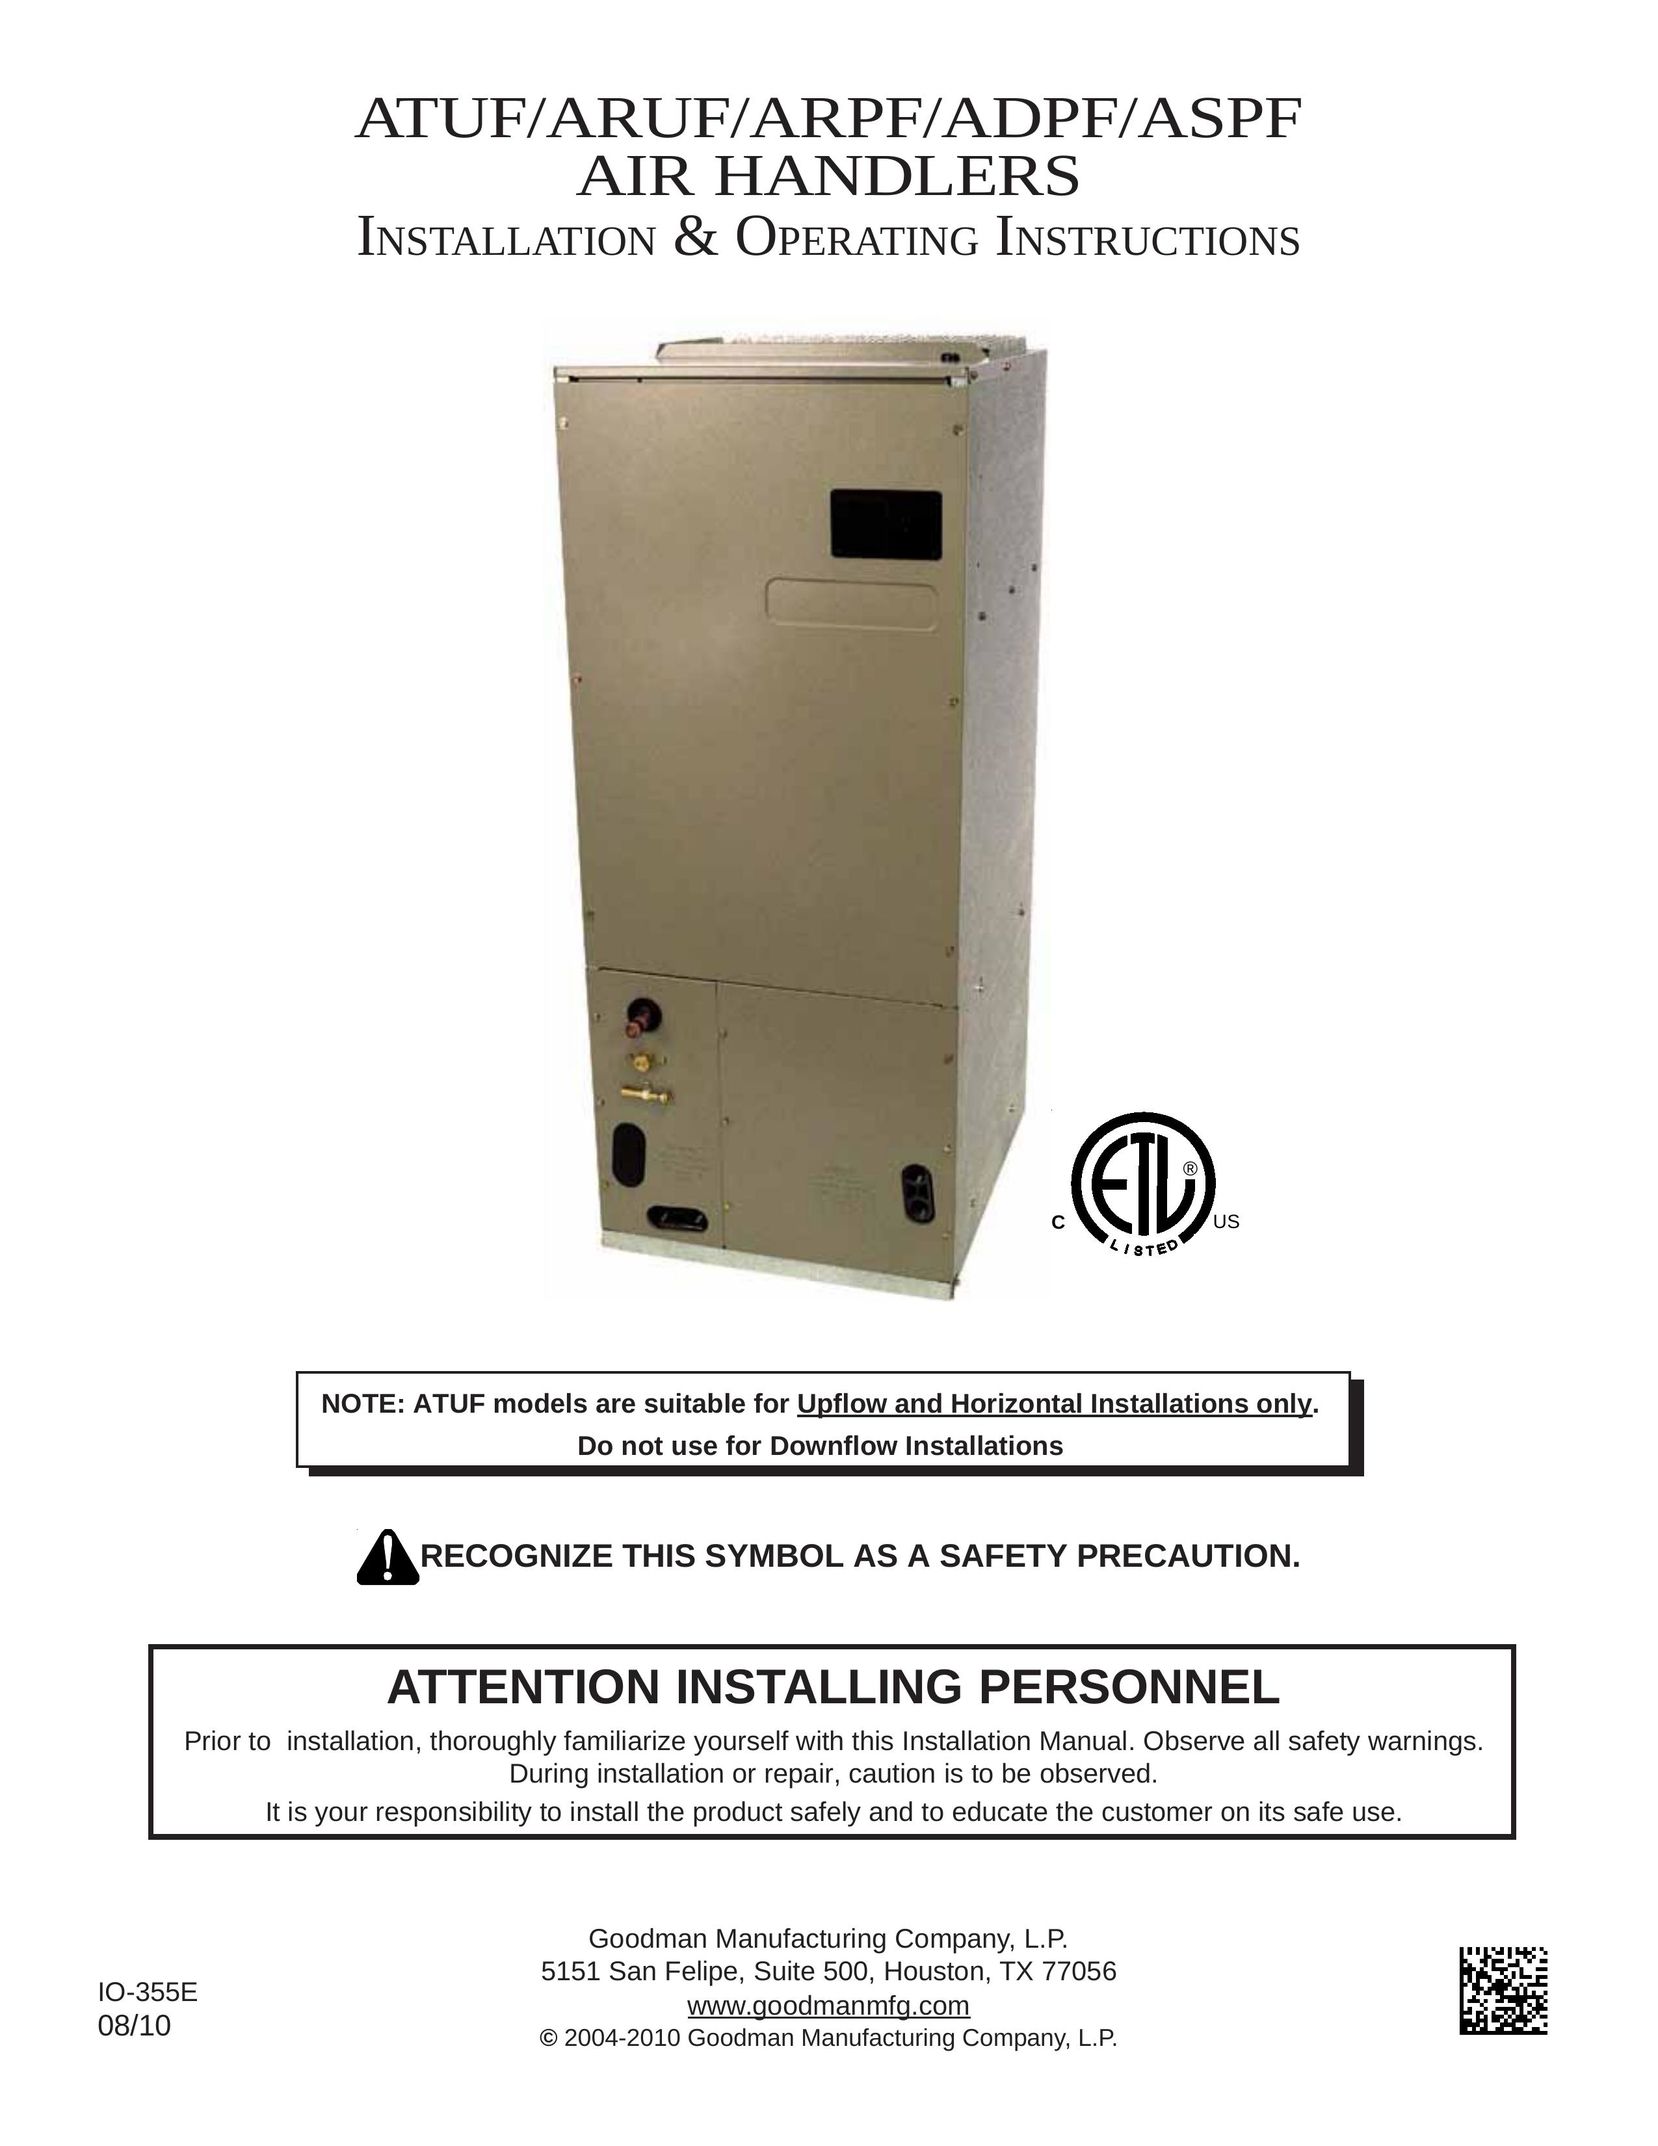 Goodman Mfg ARUF Air Conditioner User Manual